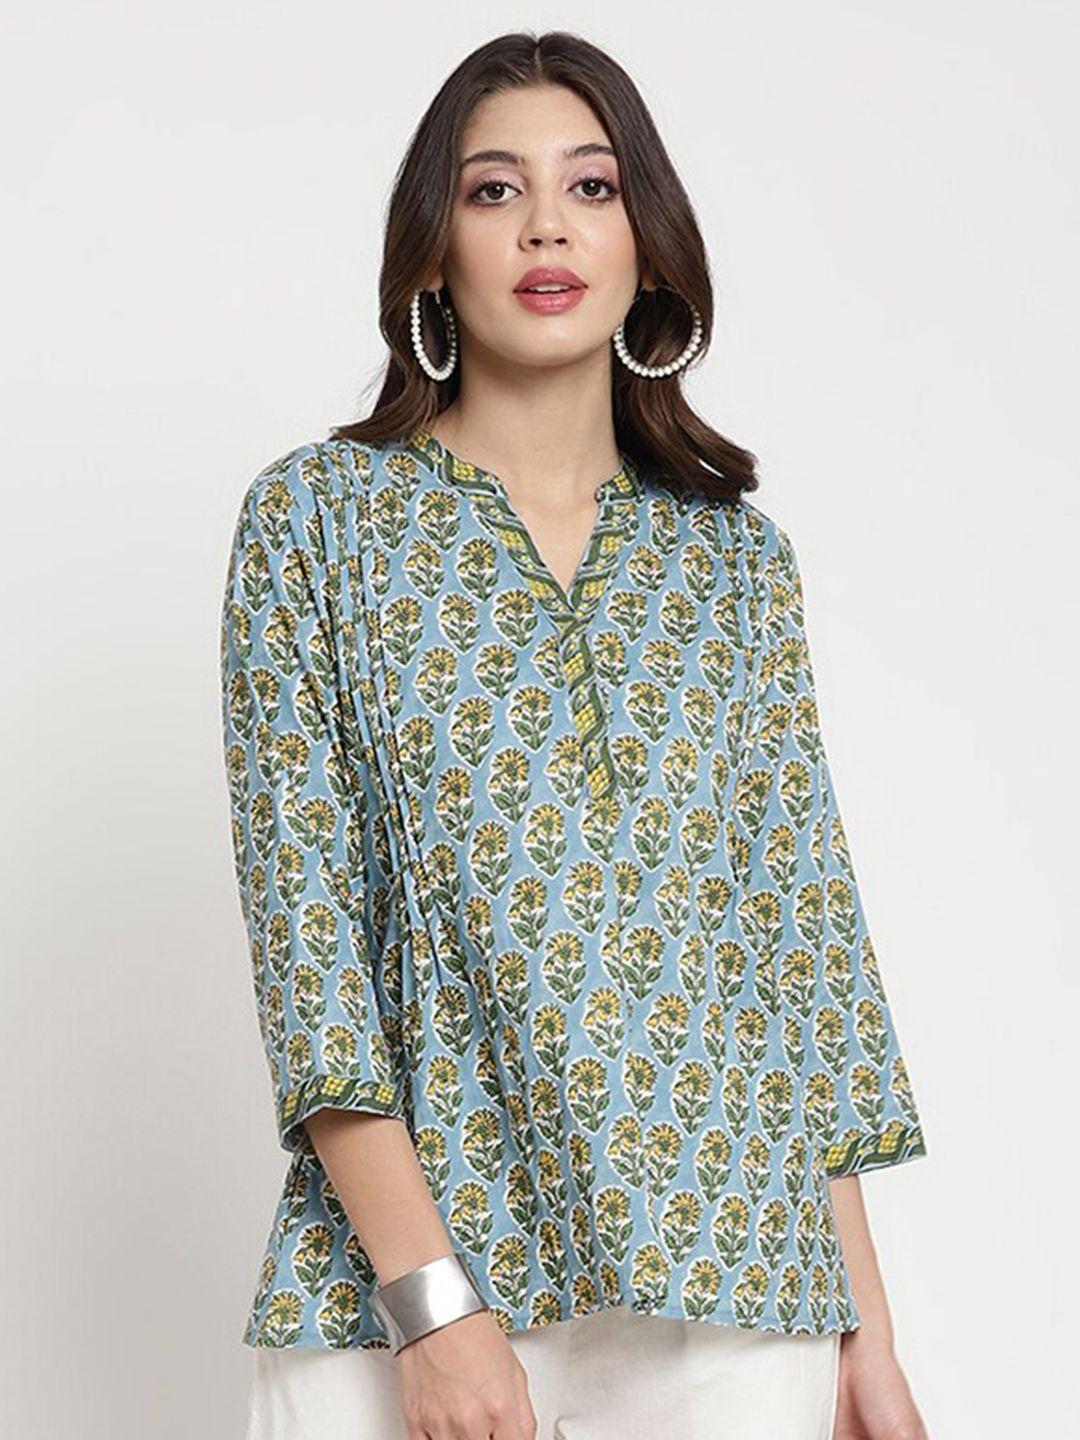 savi ethnic motifs printed cotton shirt style top